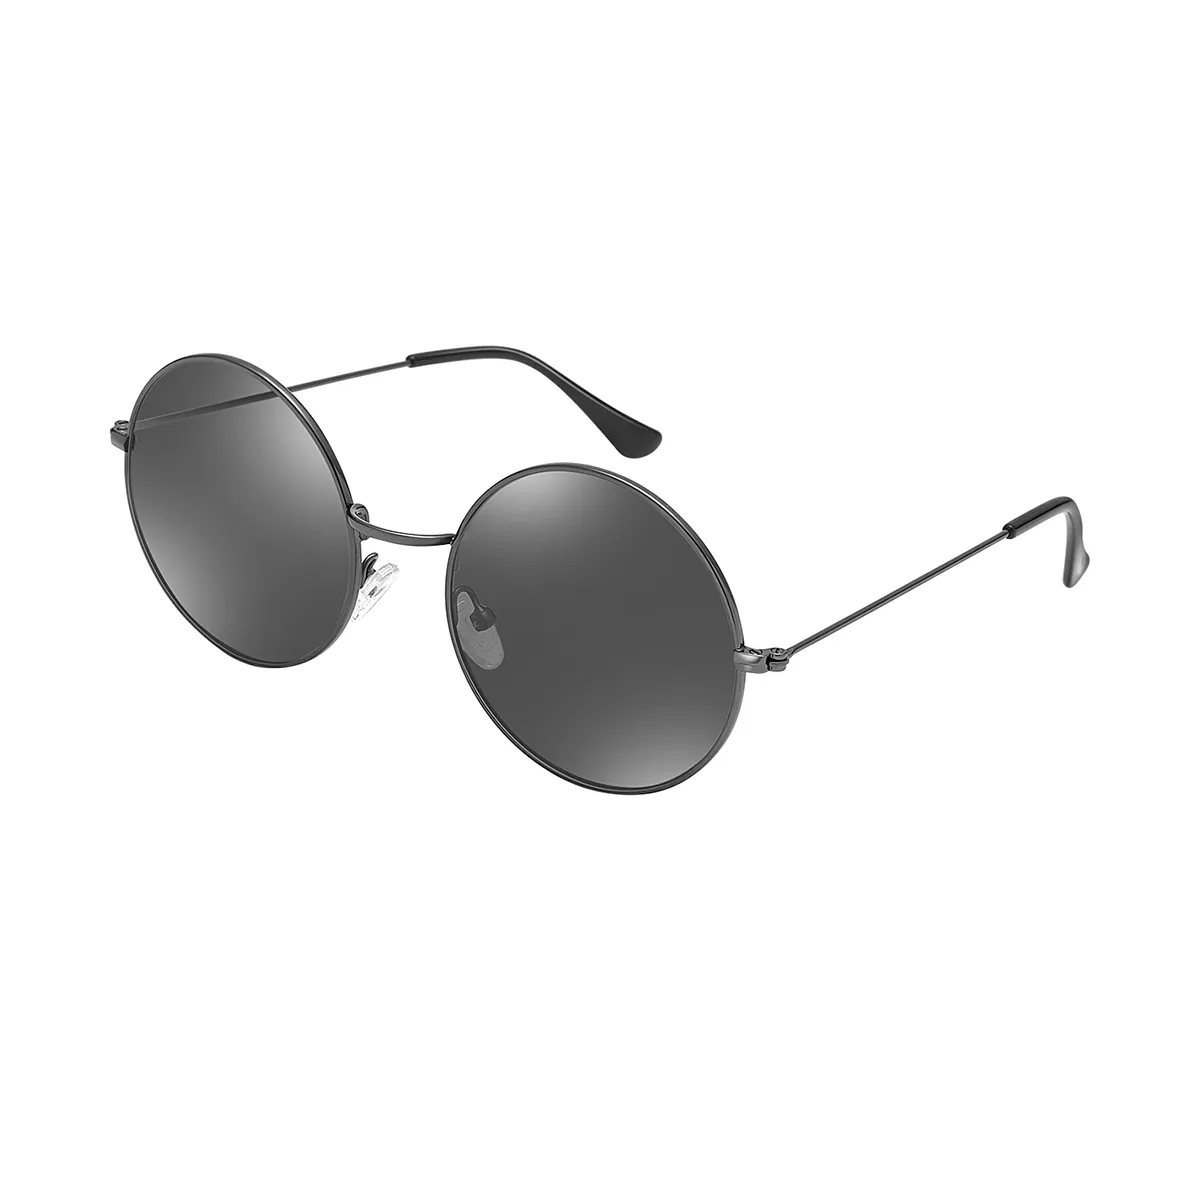 Pandora - Round Black Sunglasses for Women